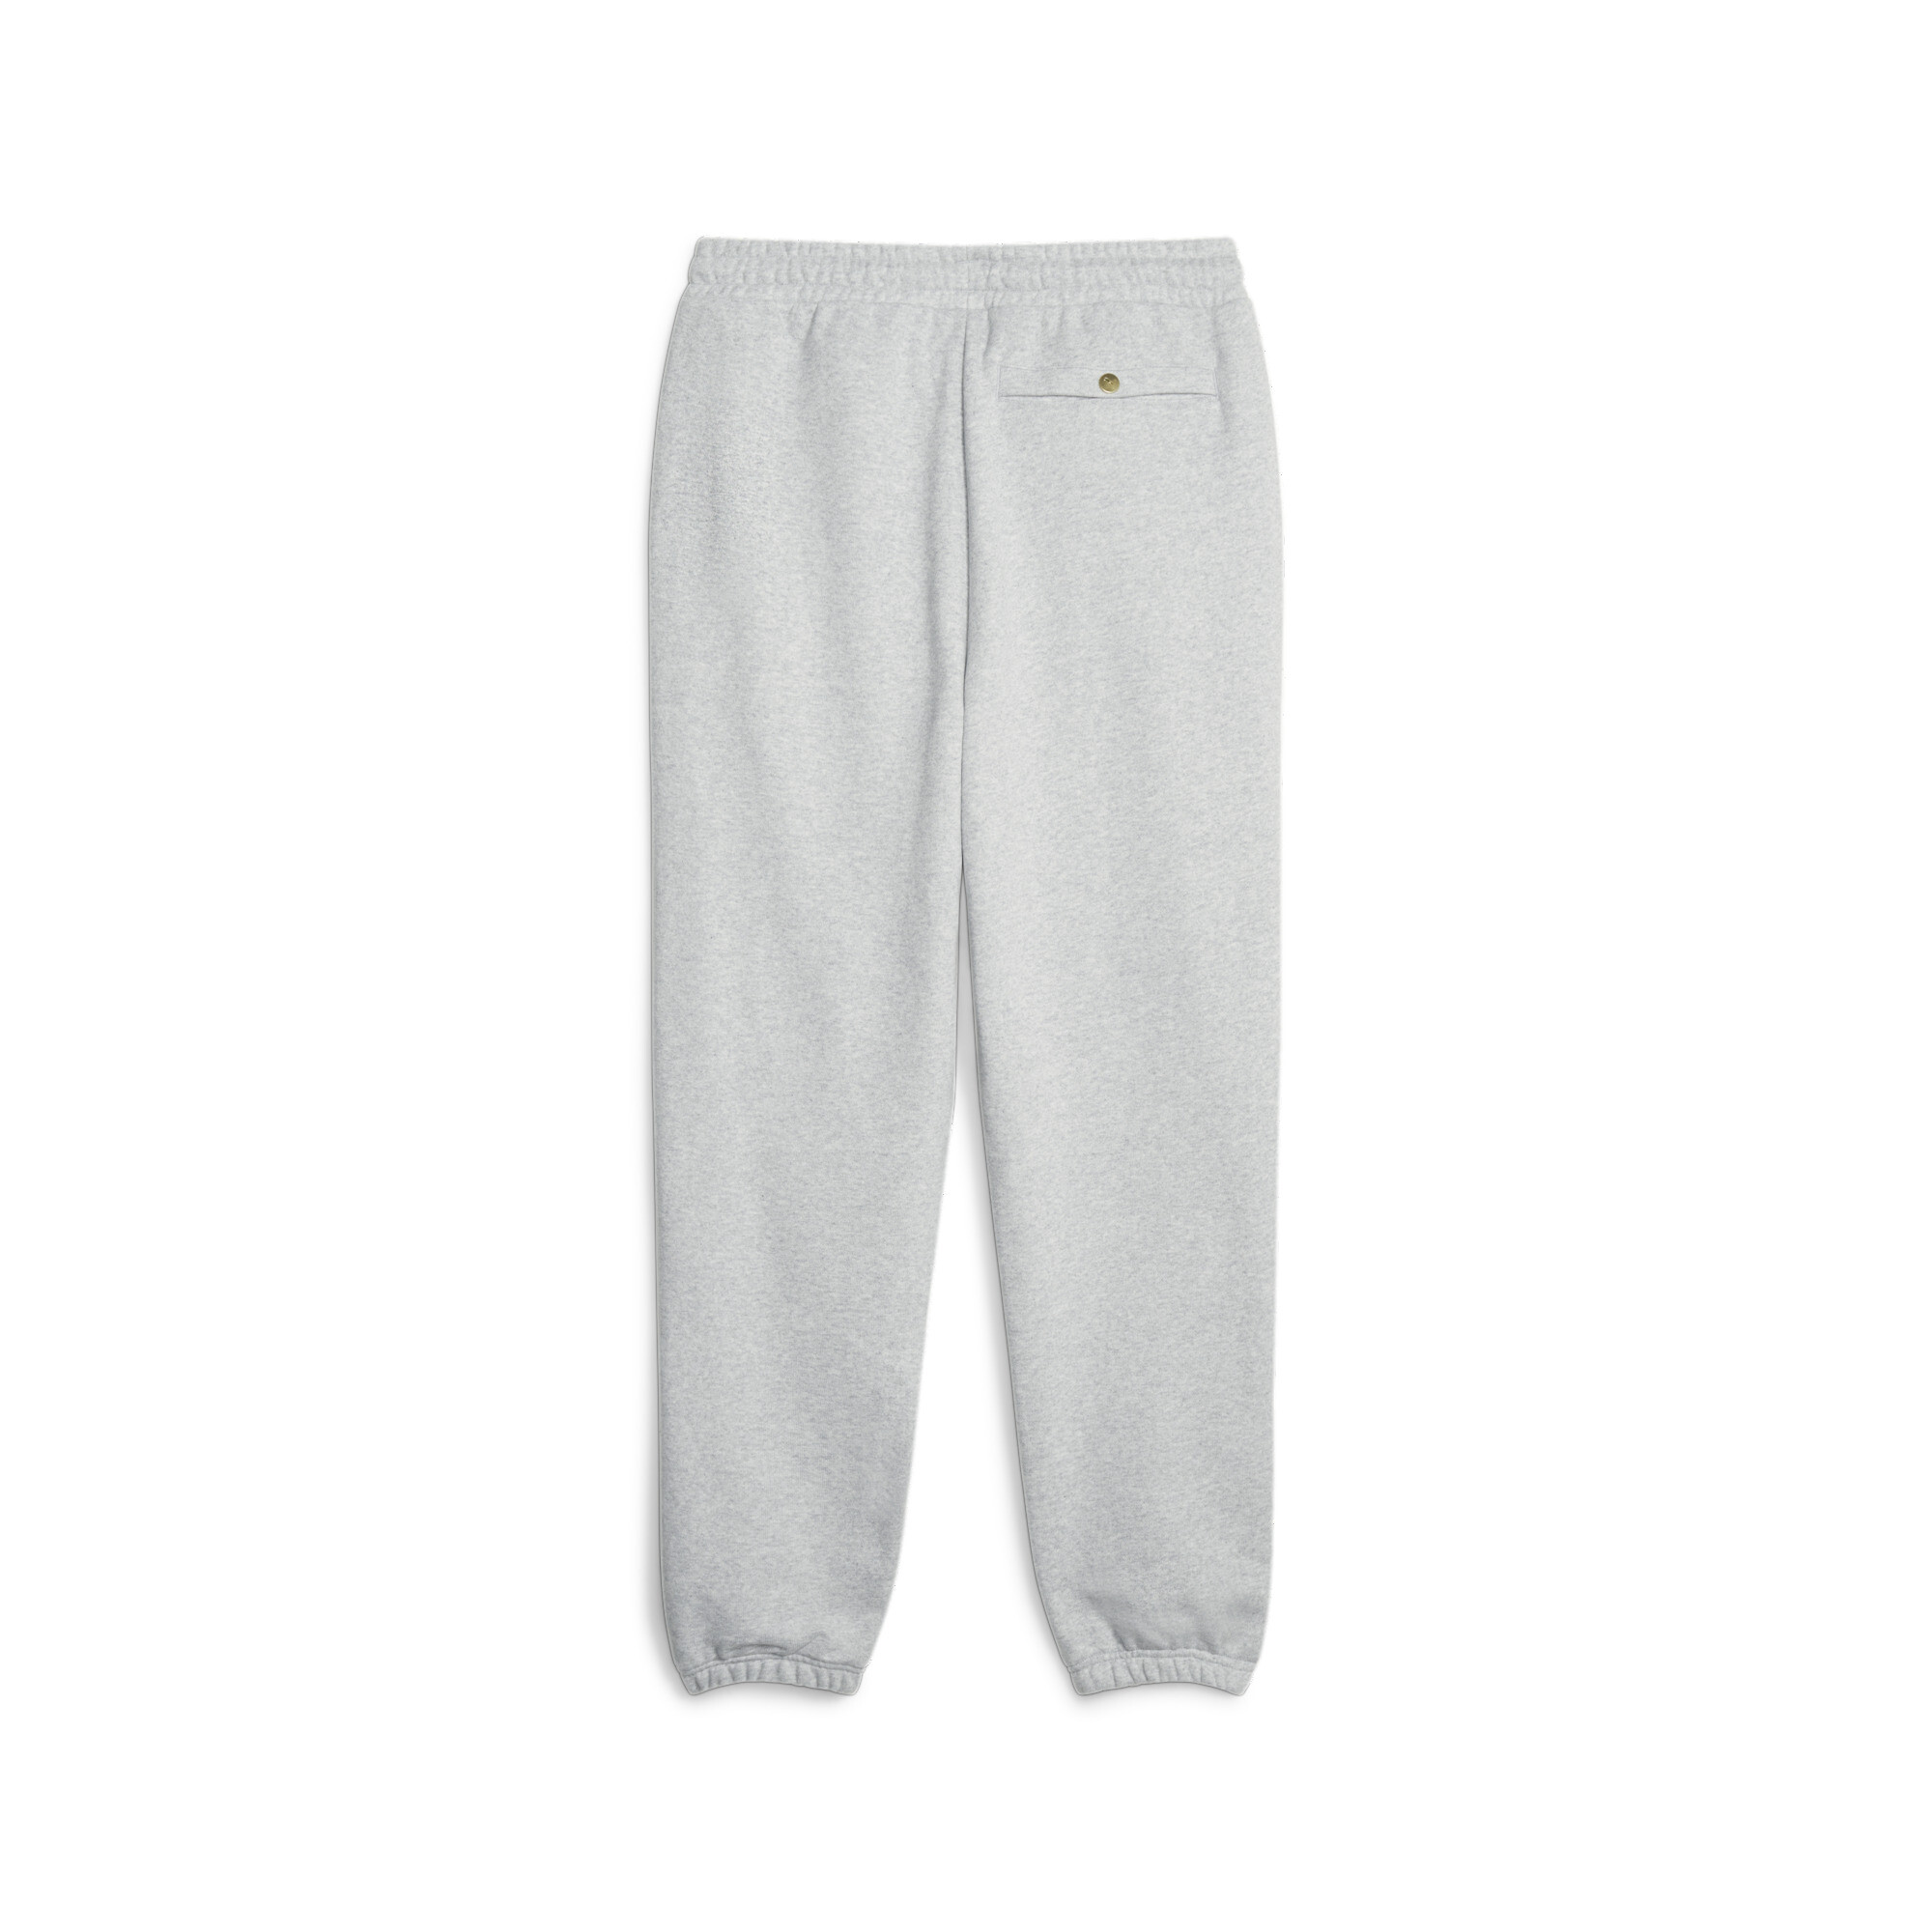 Men's Puma X STAPLE's Sweatpants, Gray, Size XXL, Clothing